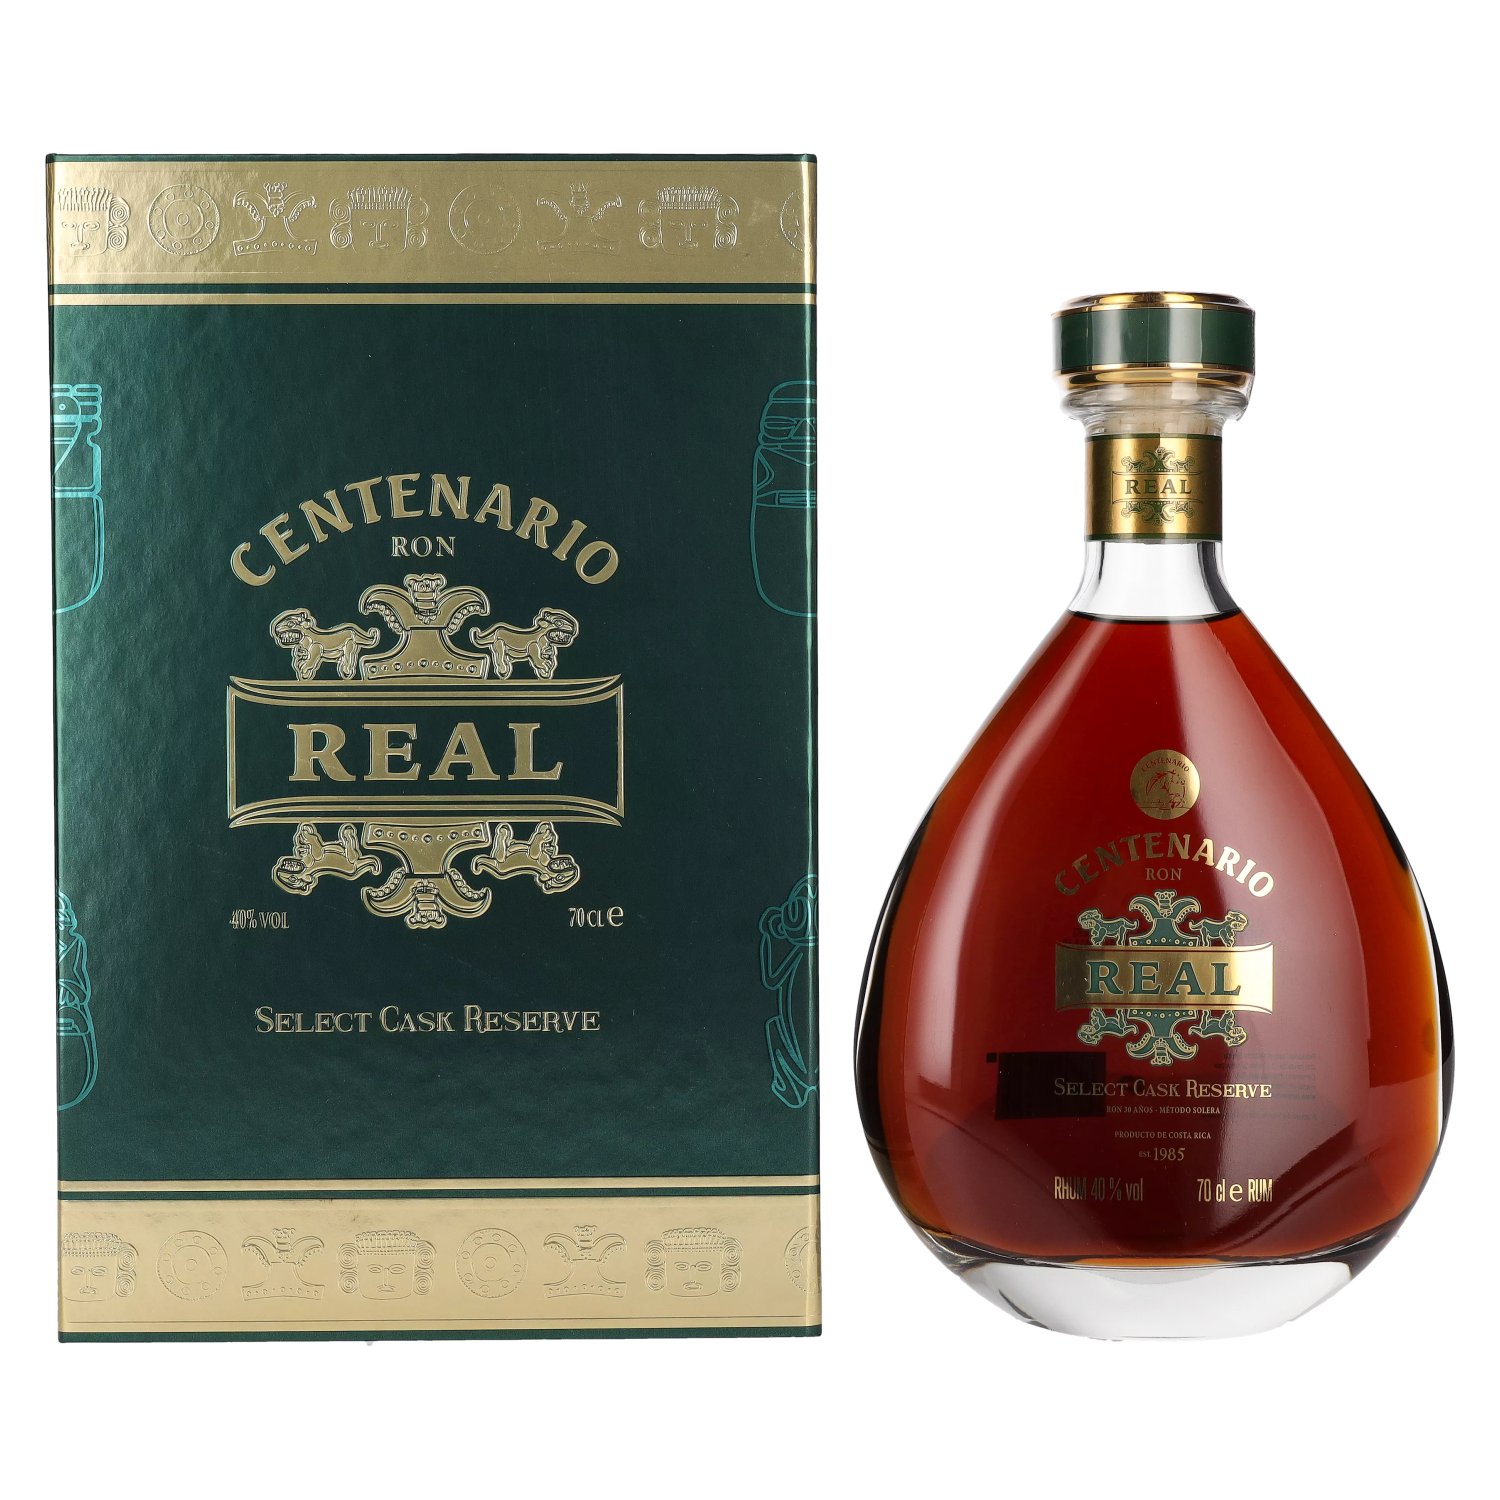 Ron Centenario REAL - Cask Geschenkbox Old Rum in Edition Vol. Select Reserve 0,7l 40